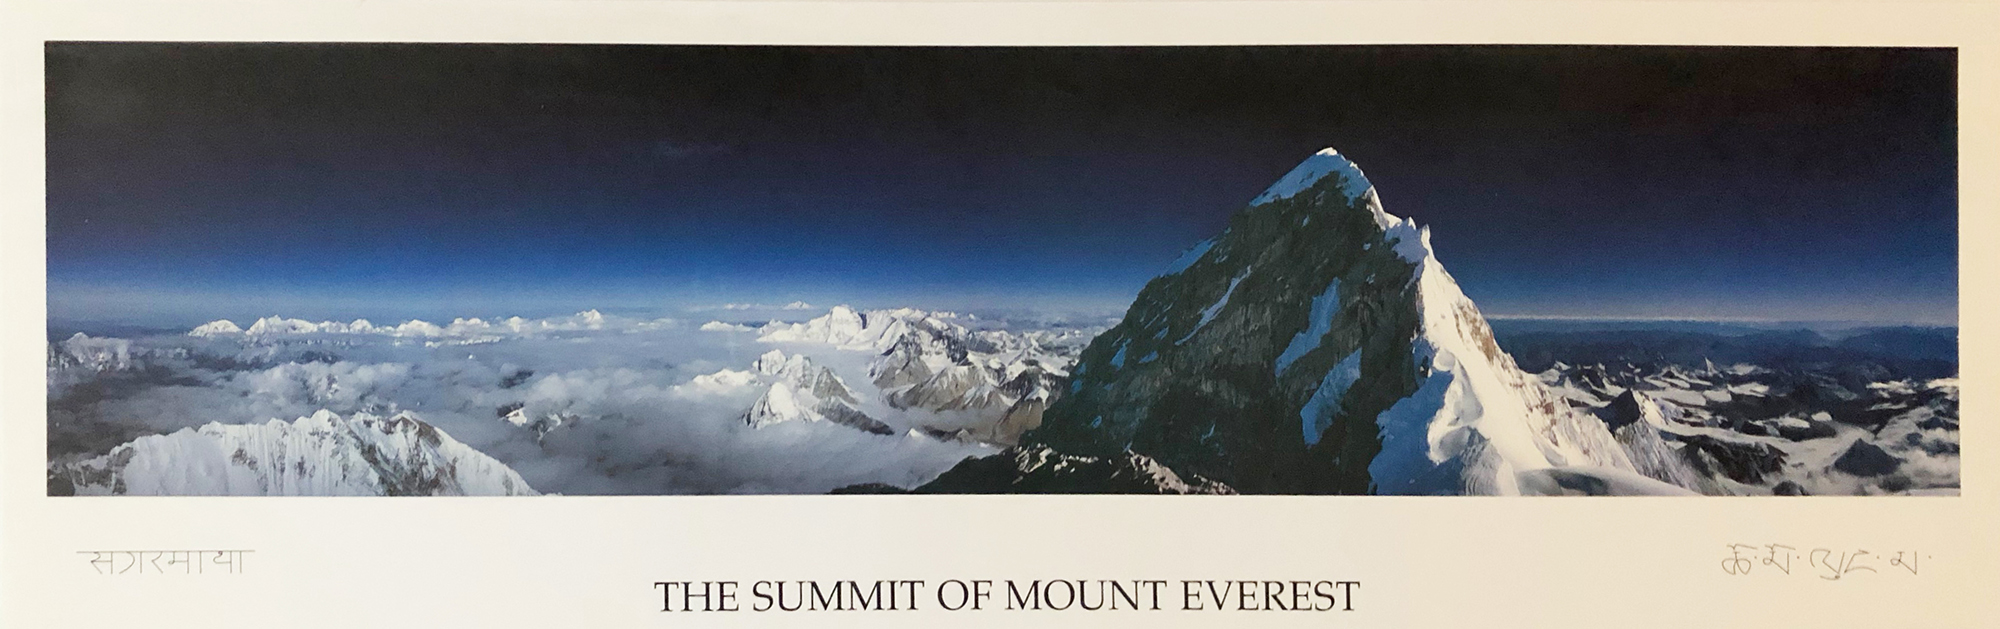 The Summit of Mount Everest